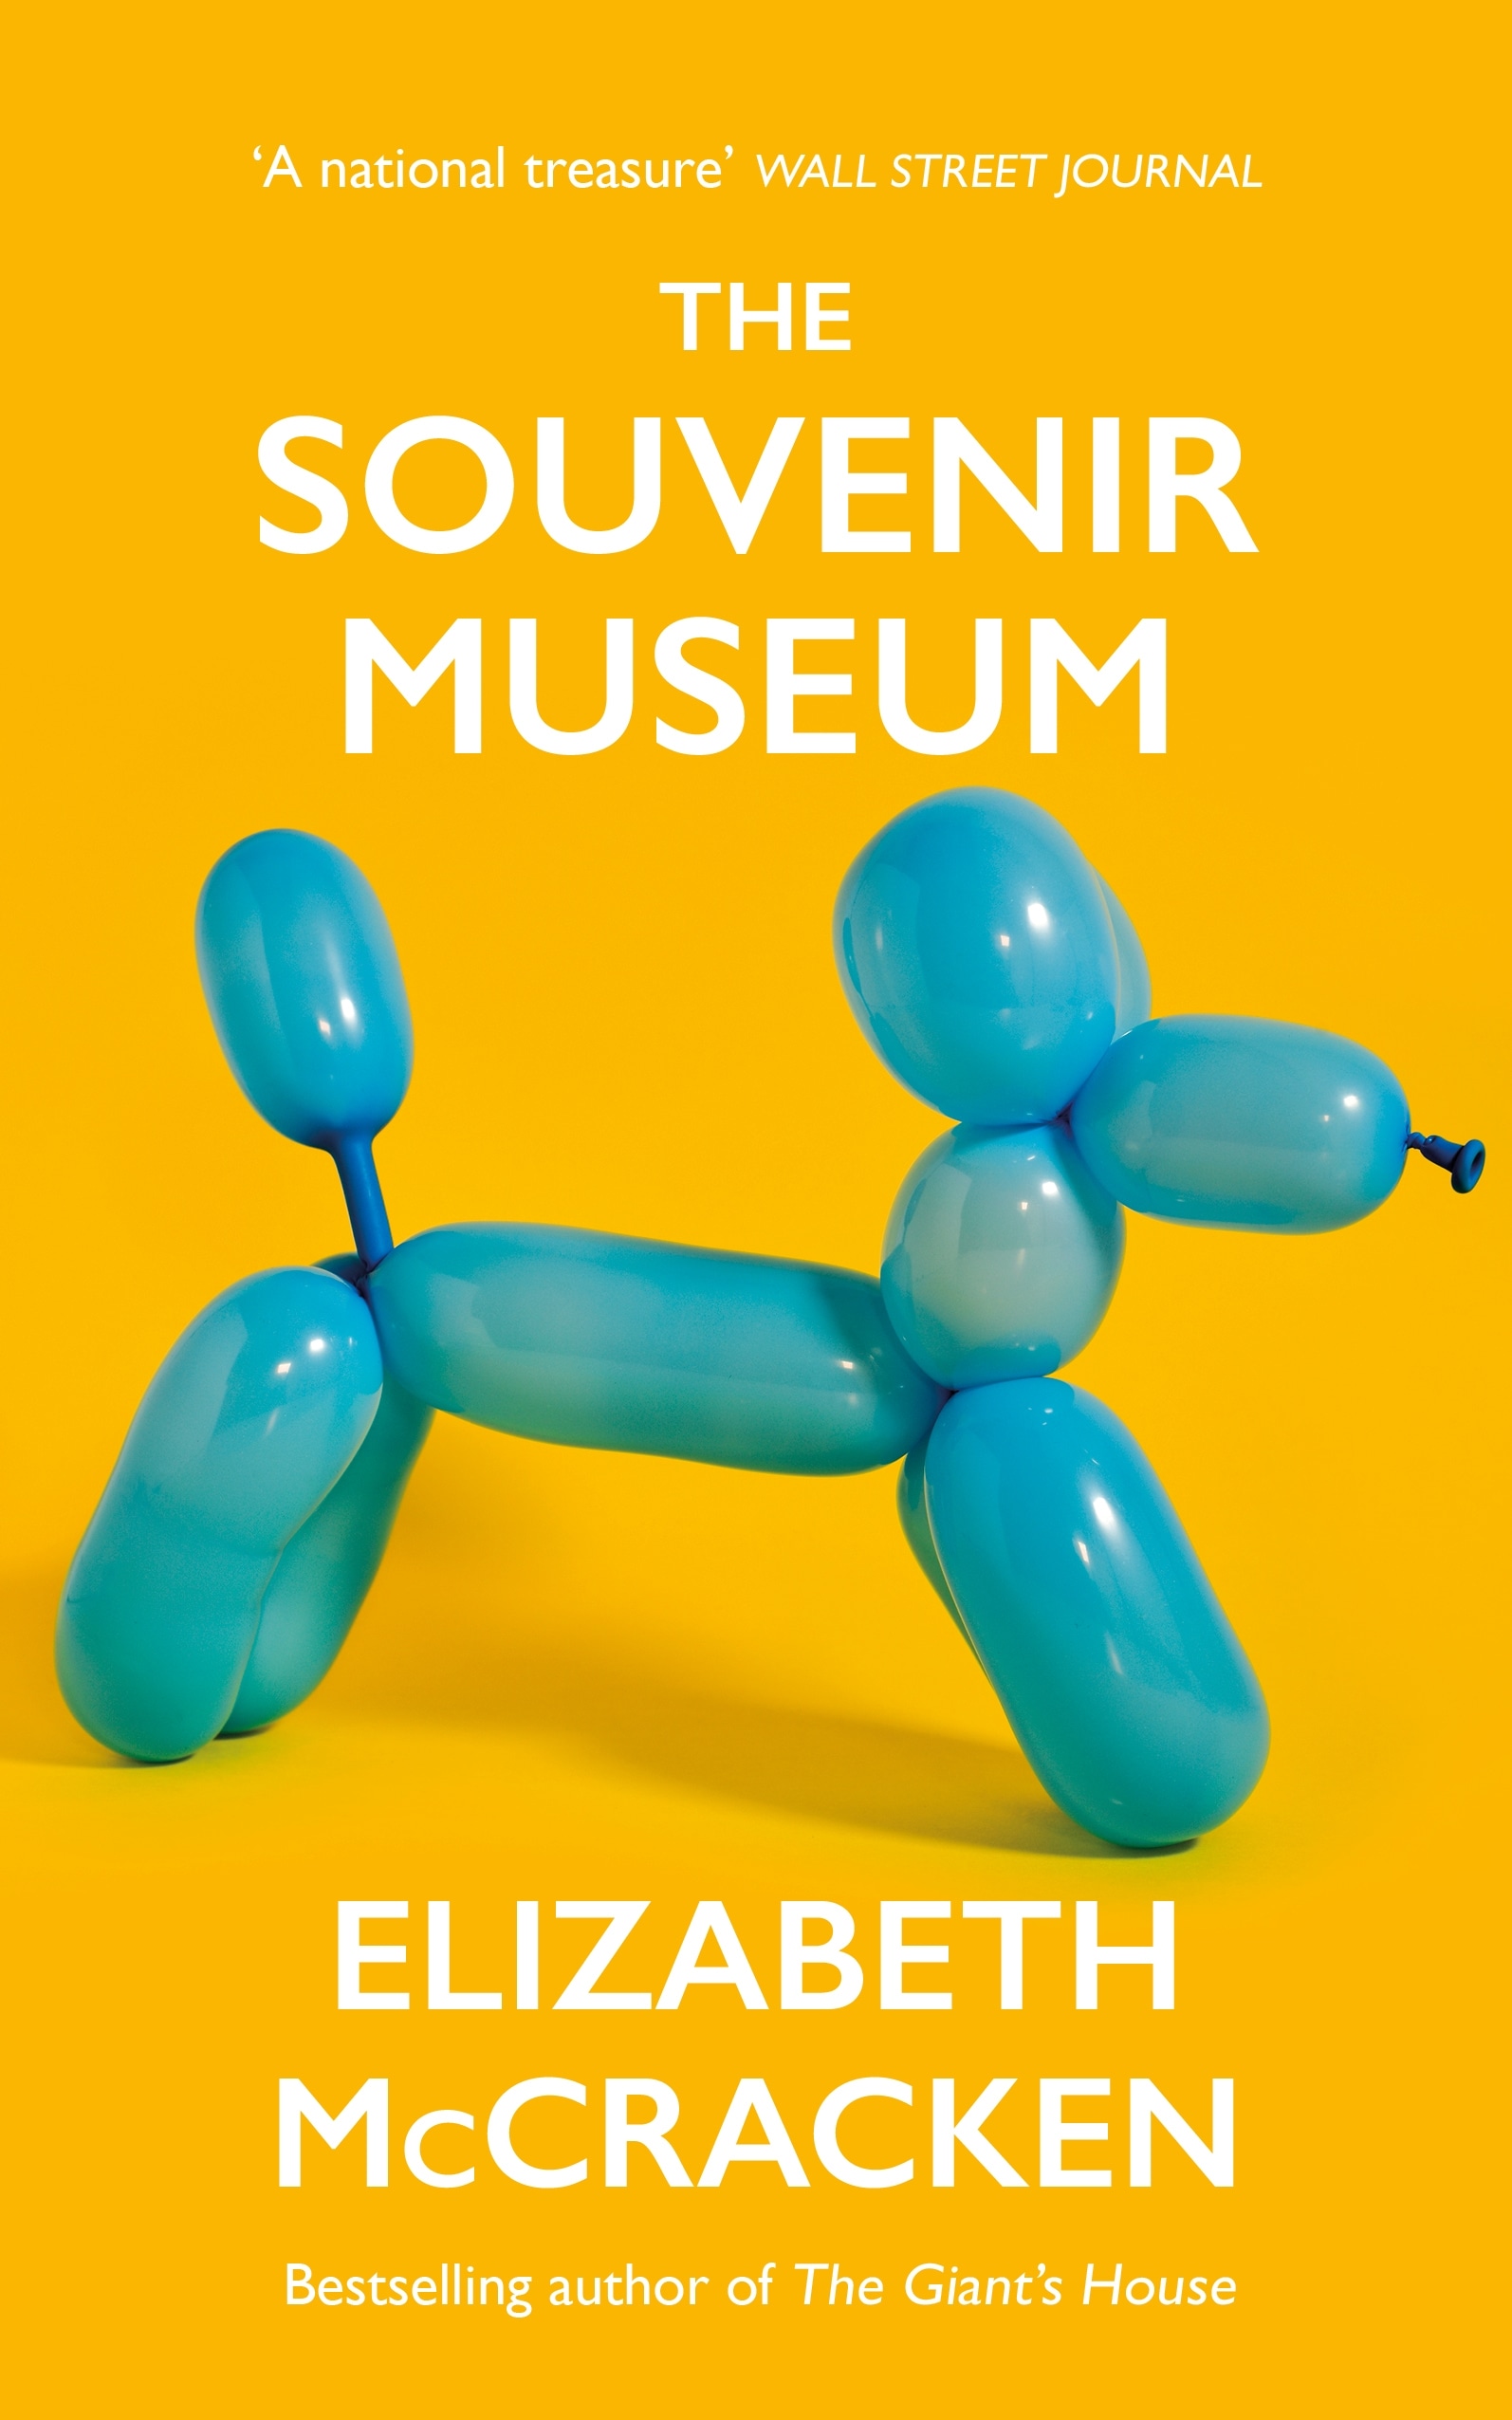 Book “The Souvenir Museum” by Elizabeth McCracken — June 3, 2021